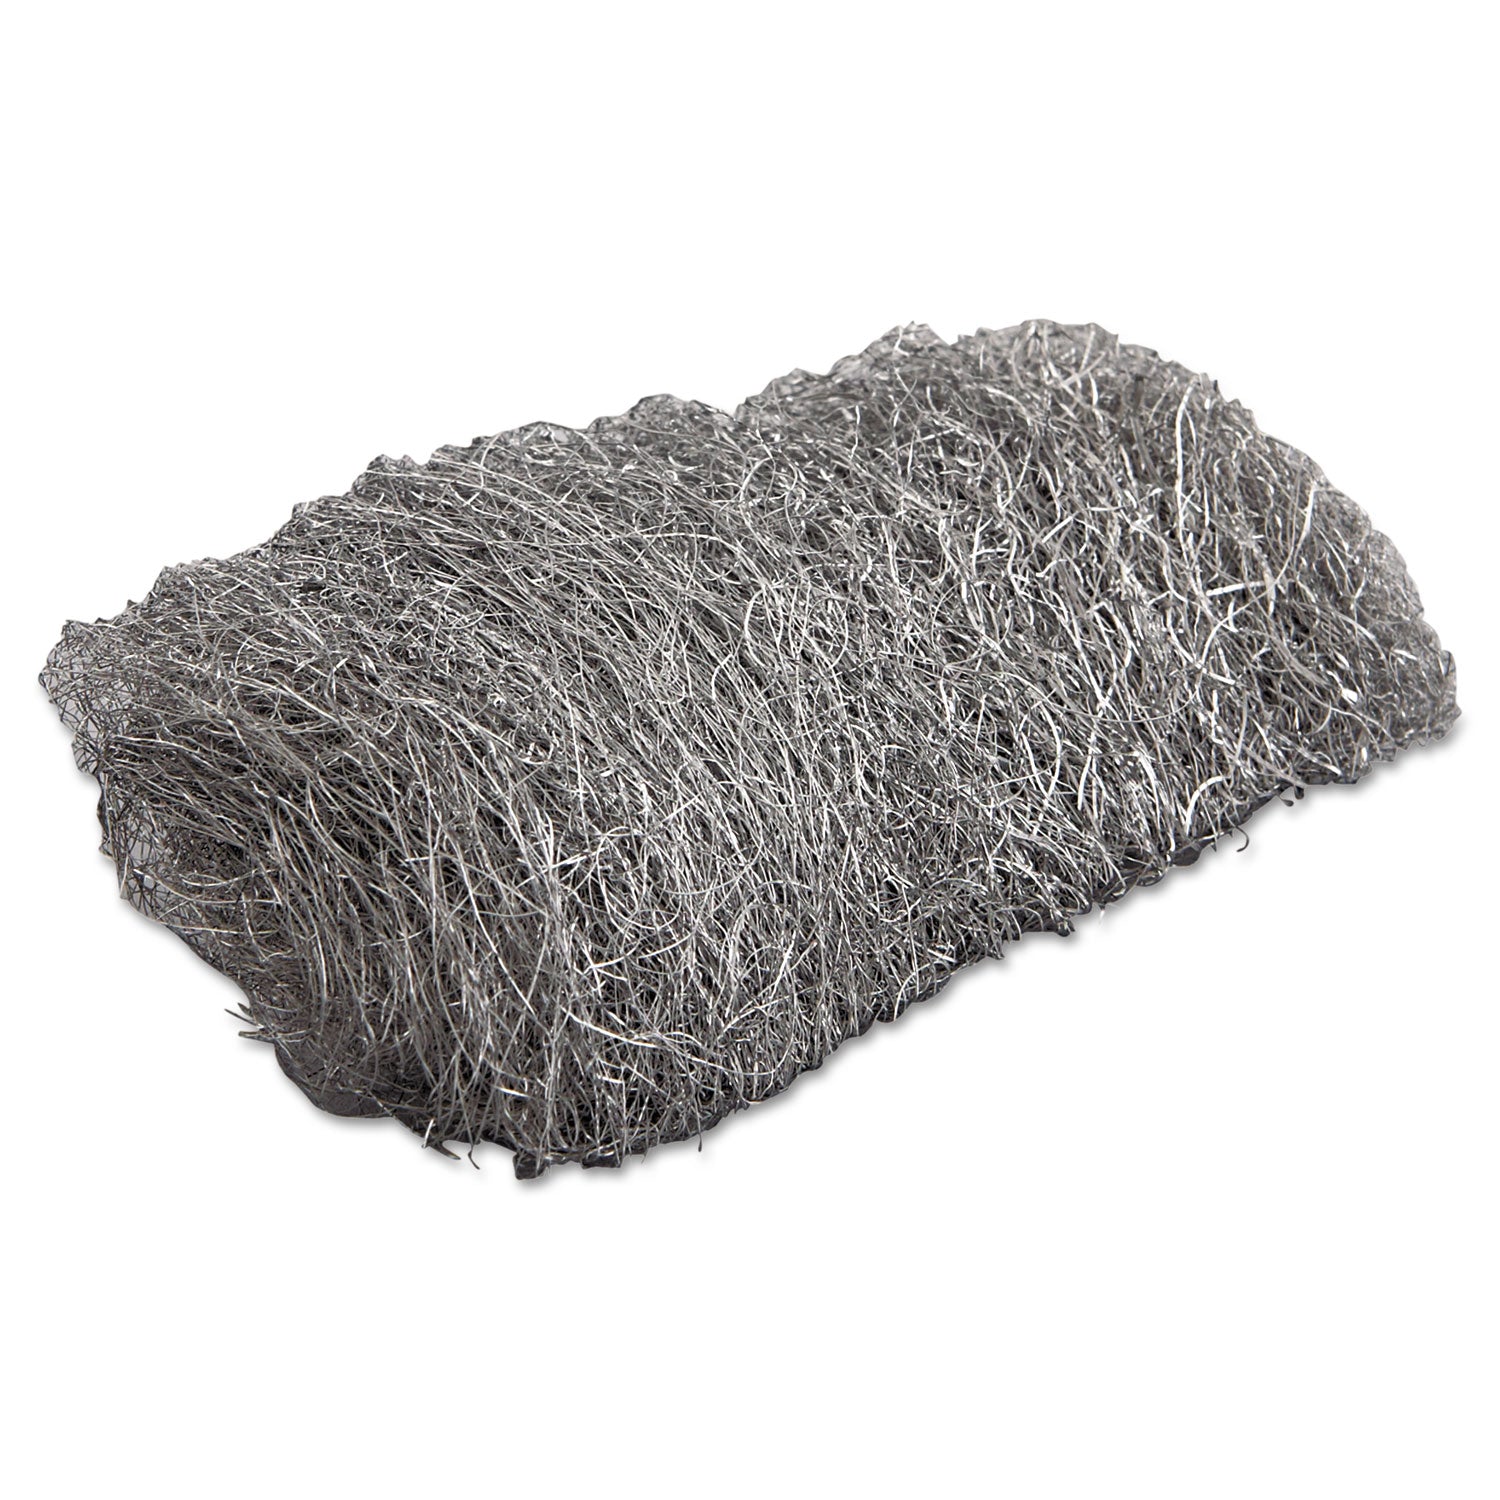 industrial-quality-steel-wool-reel-#2-medium-coarse-5-lb-reel-steel-gray-6-carton_gma105045 - 1